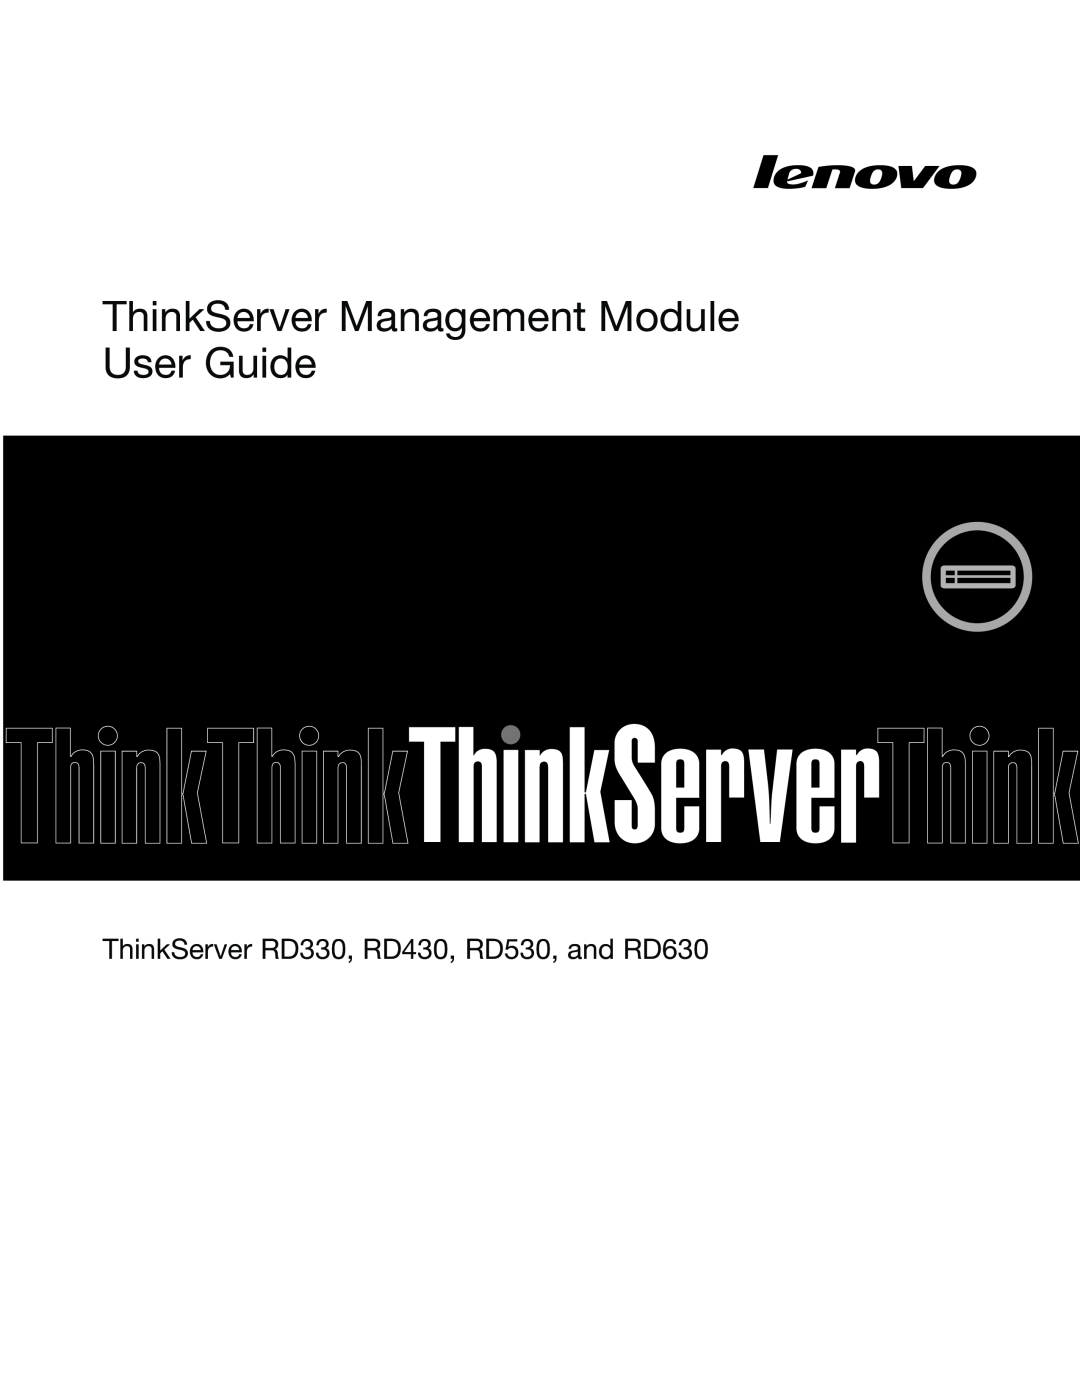 Lenovo manual ThinkServer Management Module User Guide, ThinkServer RD330, RD430, RD530, and RD630 